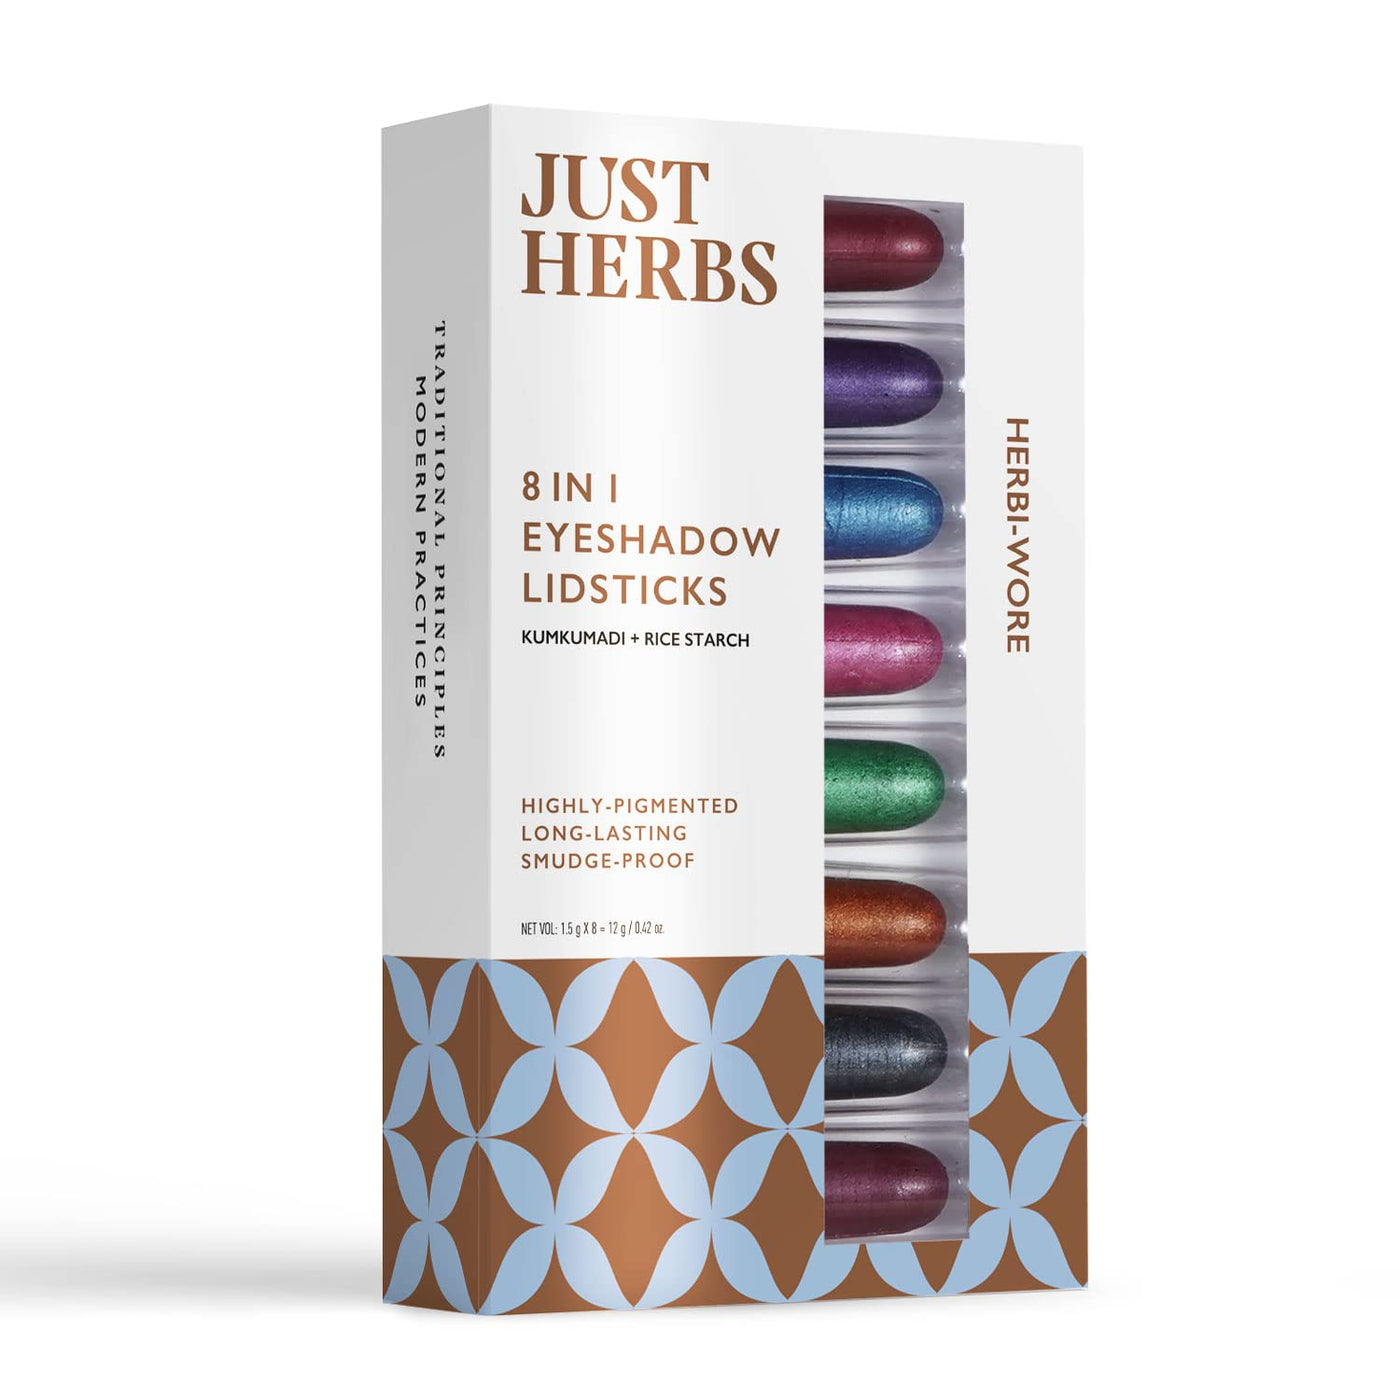 8 in 1 Eyeshadow Lidsticks - Herbiwore | No Talc | Silicon Free